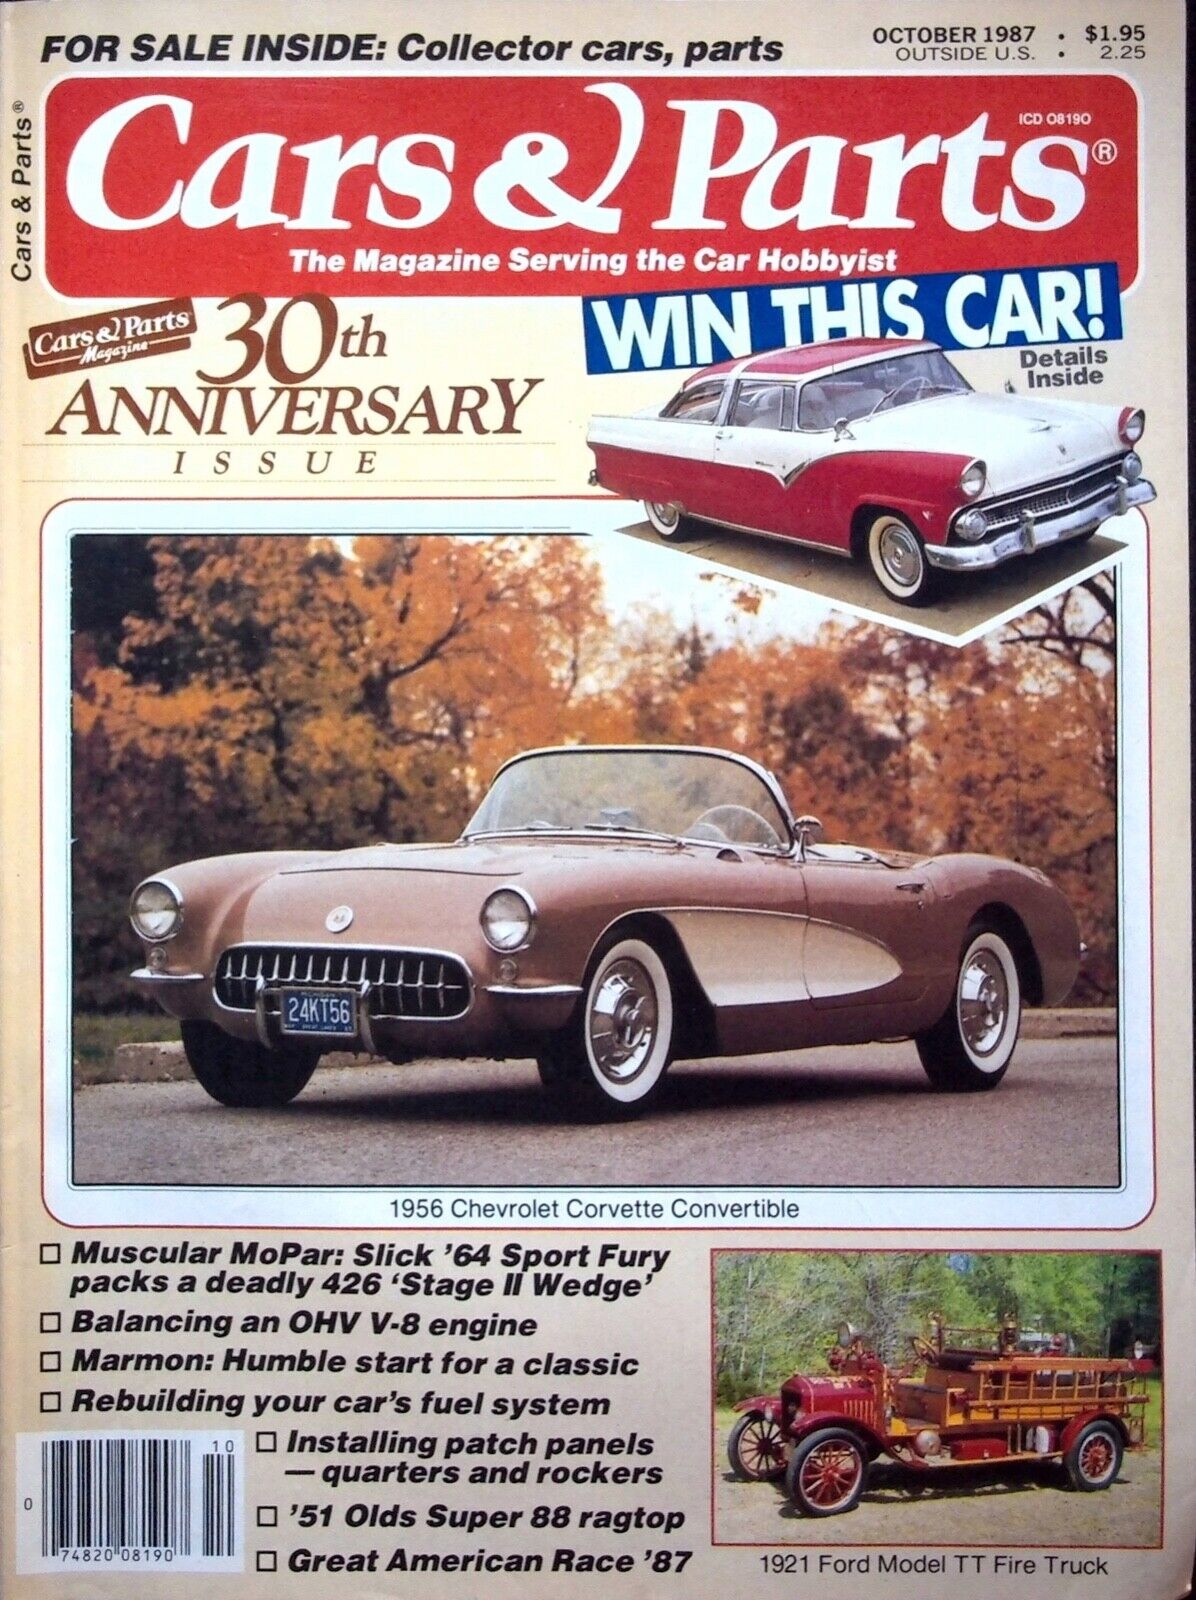 1956 CHEVROLET CORVETTE CONVERTIBLE - CARS & PARTS MAGAZINE, OCTOBER 1987